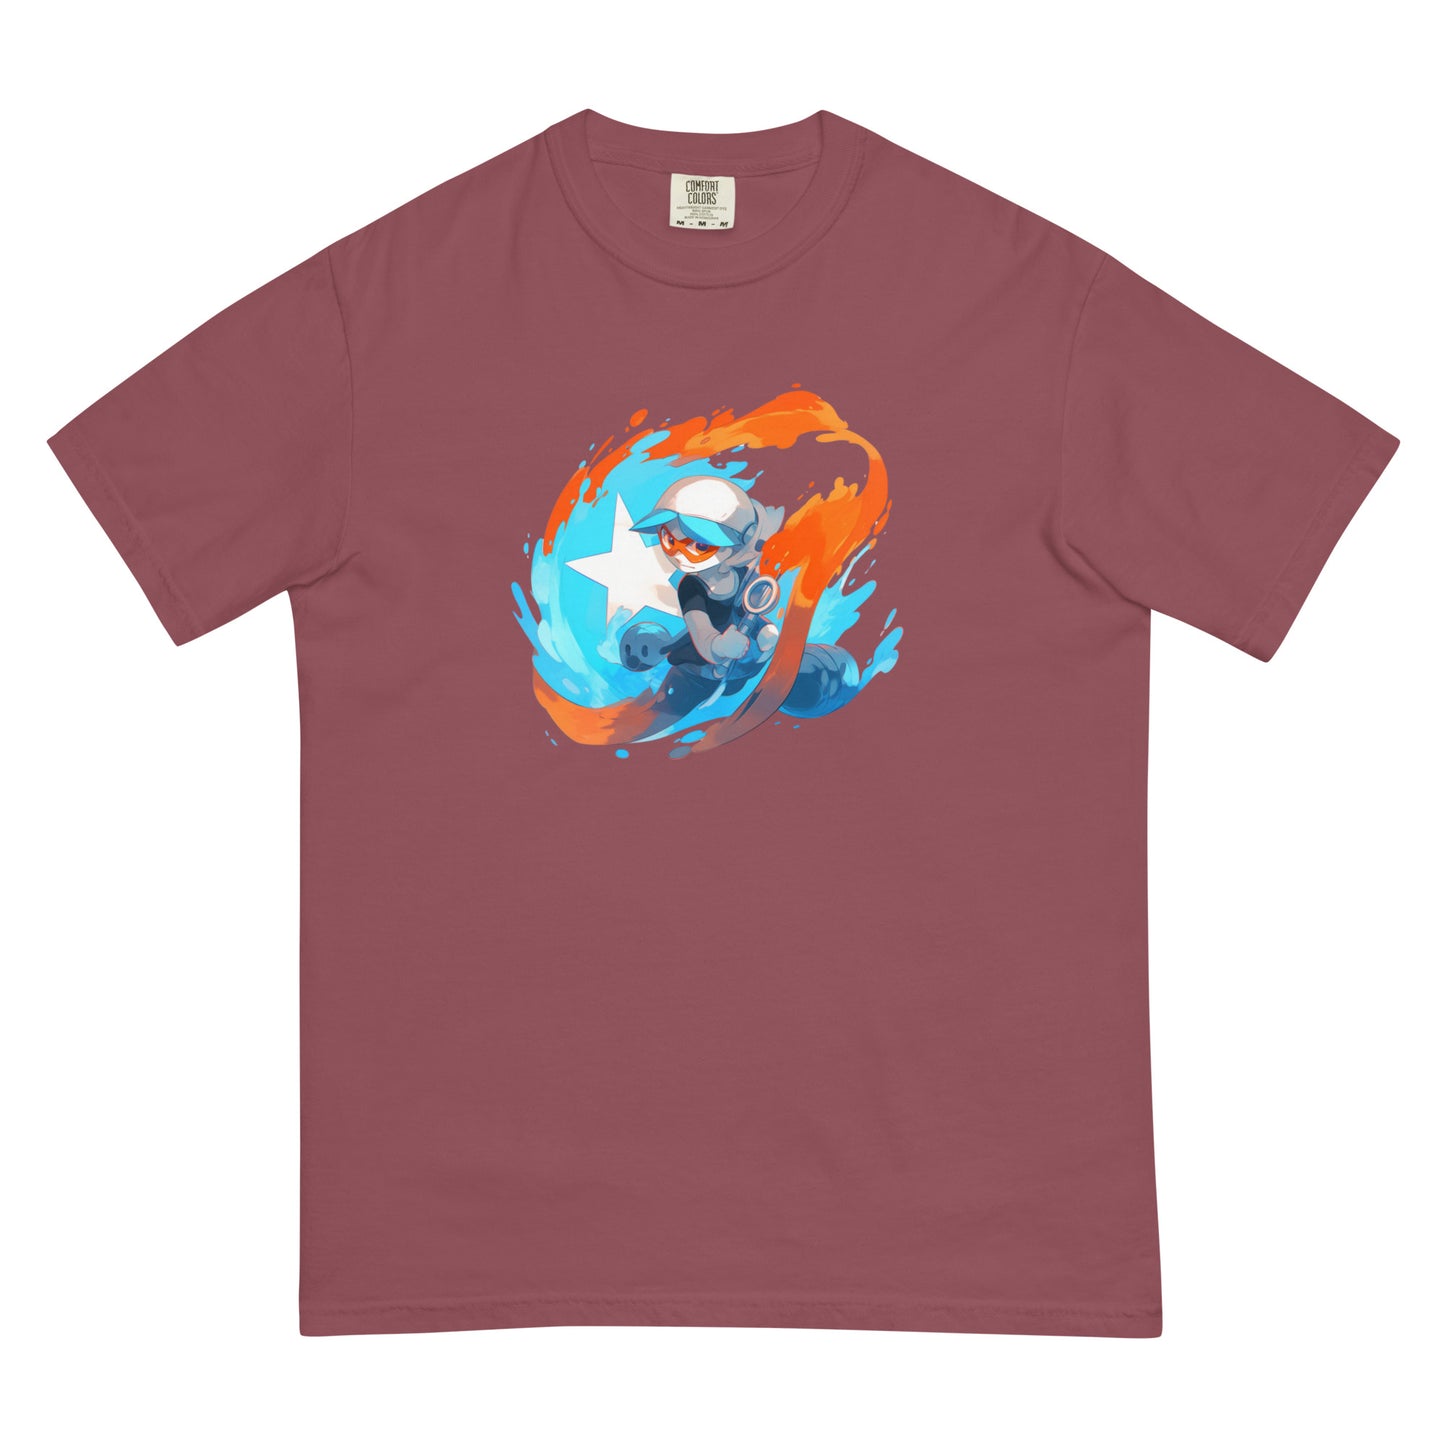 PR Paint Anime #1 | Unisex garment-dyed heavyweight t-shirt